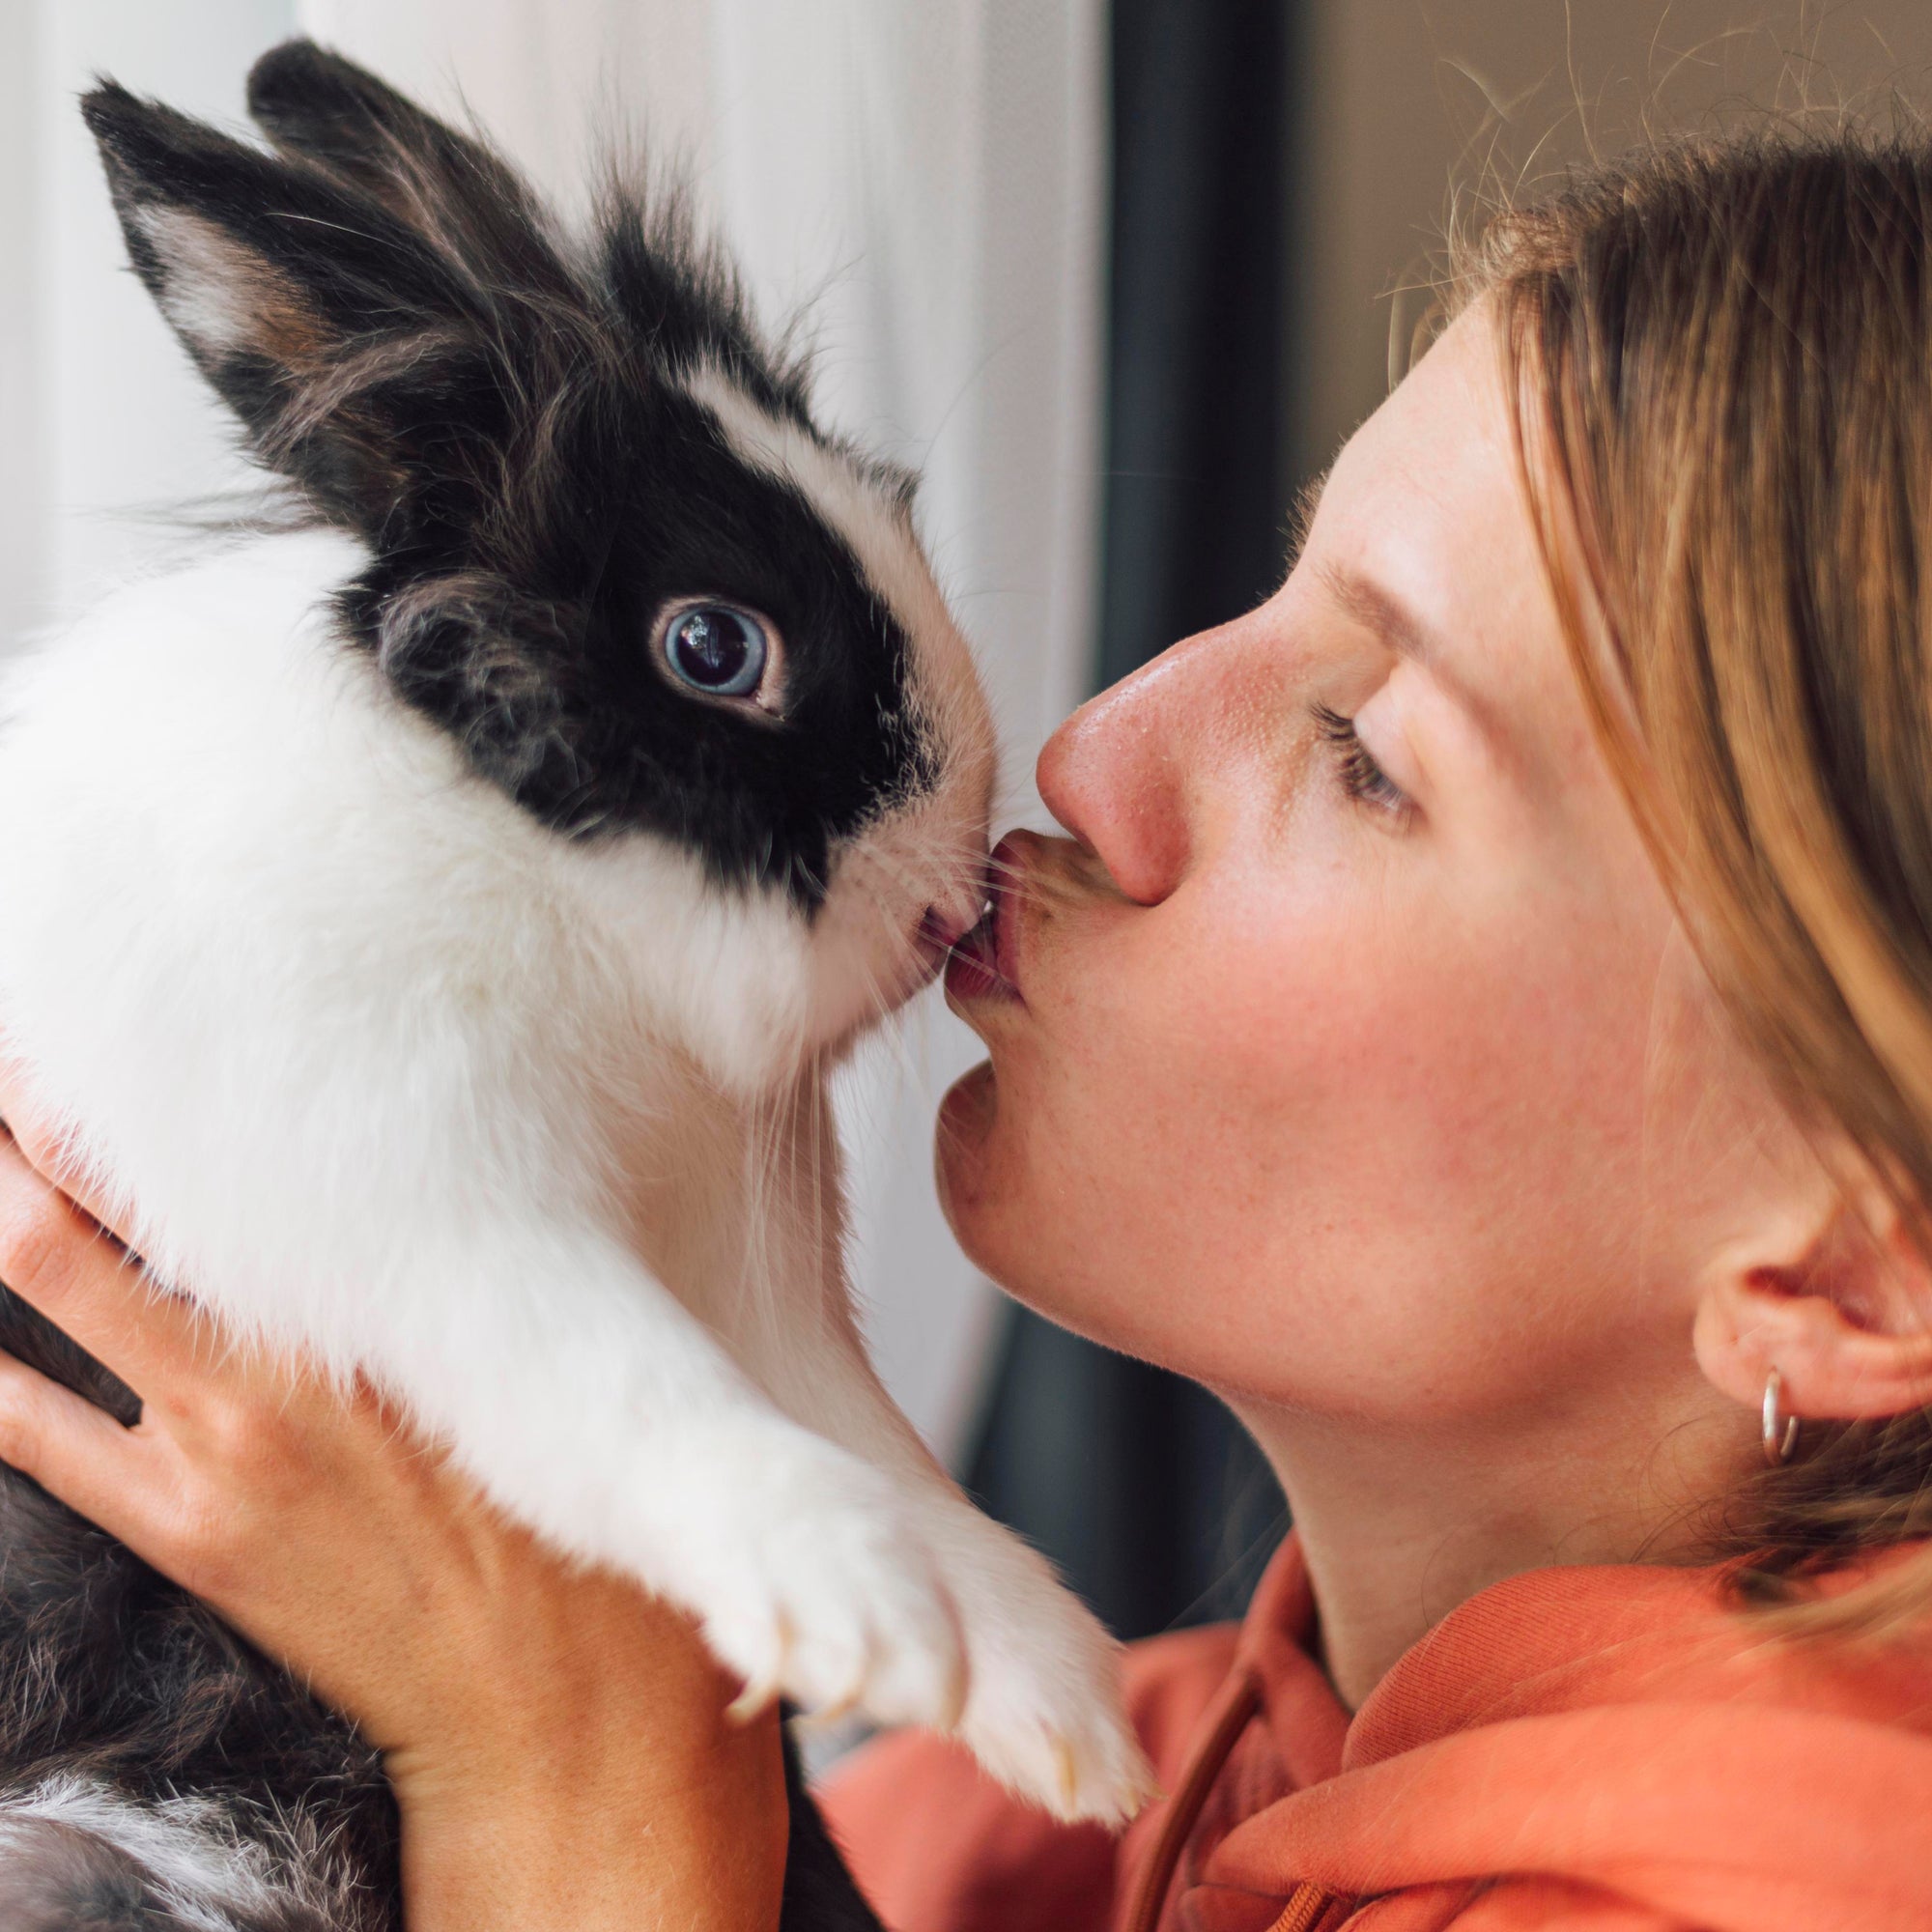 Woman with pet rabbit